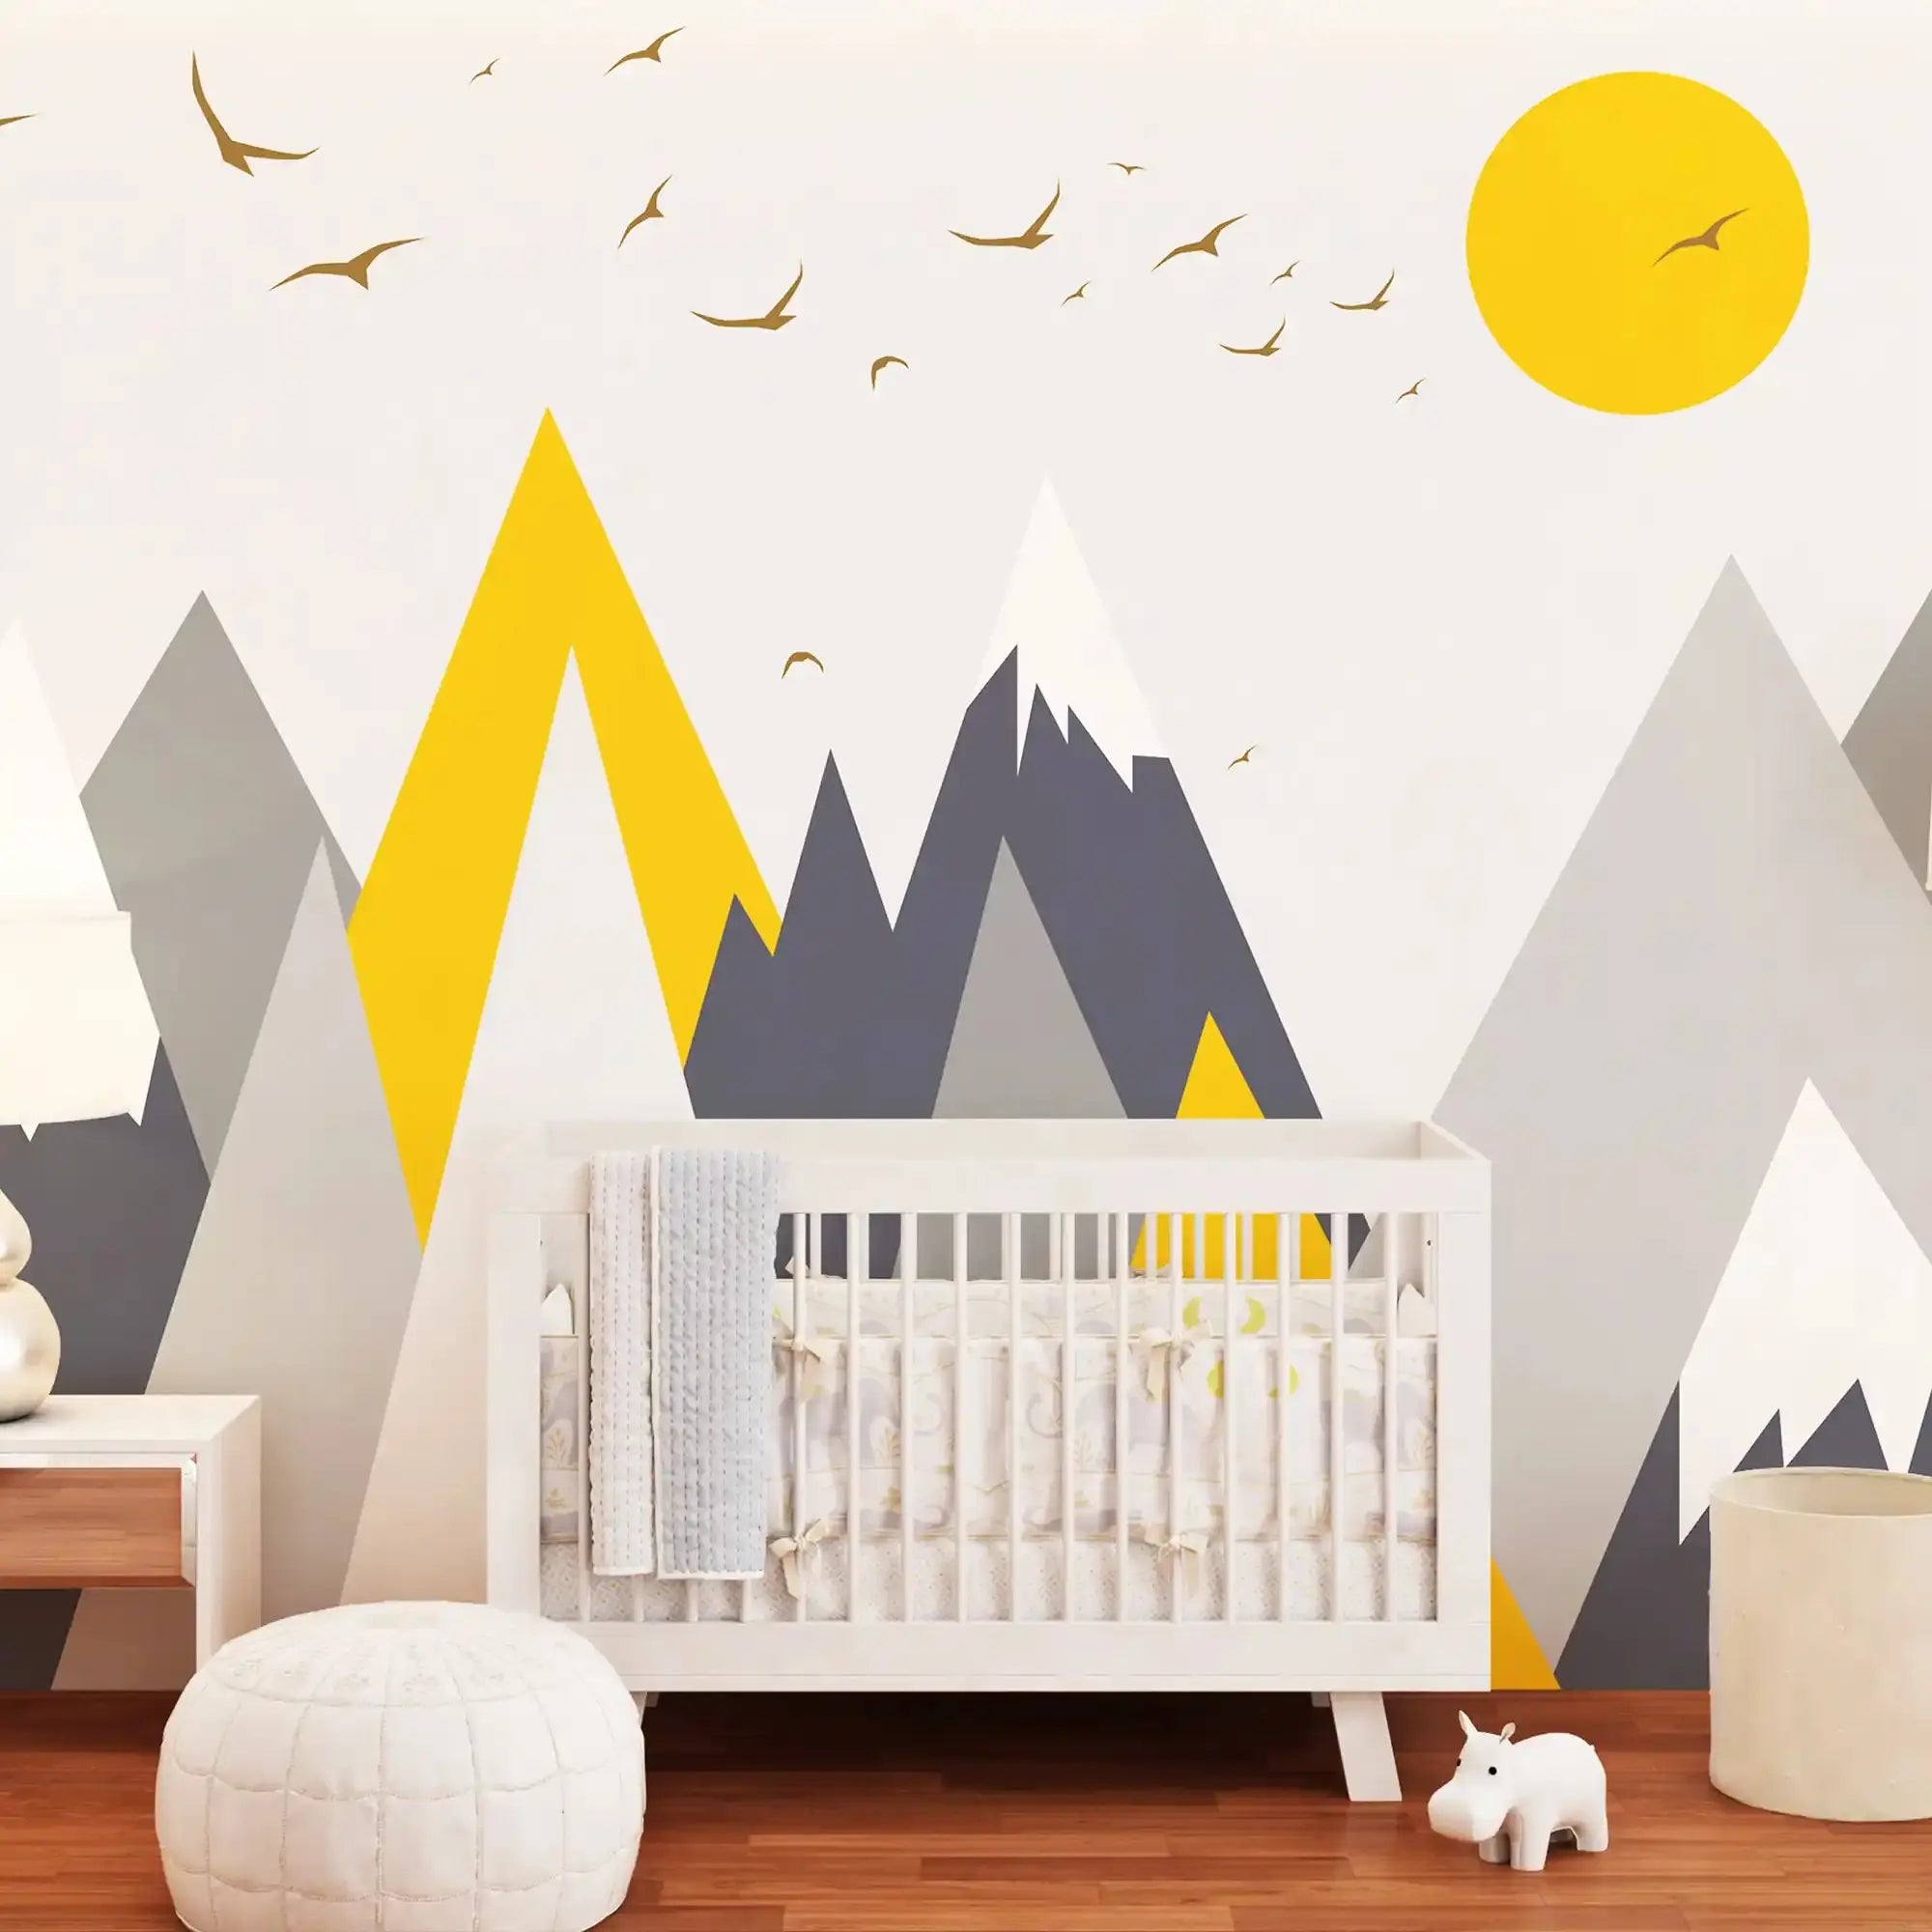 6005 / Yellowish Mountain Range Wallpaper: DIY Peel and Stick Mural for Child & Toddler Bedroom - Artevella